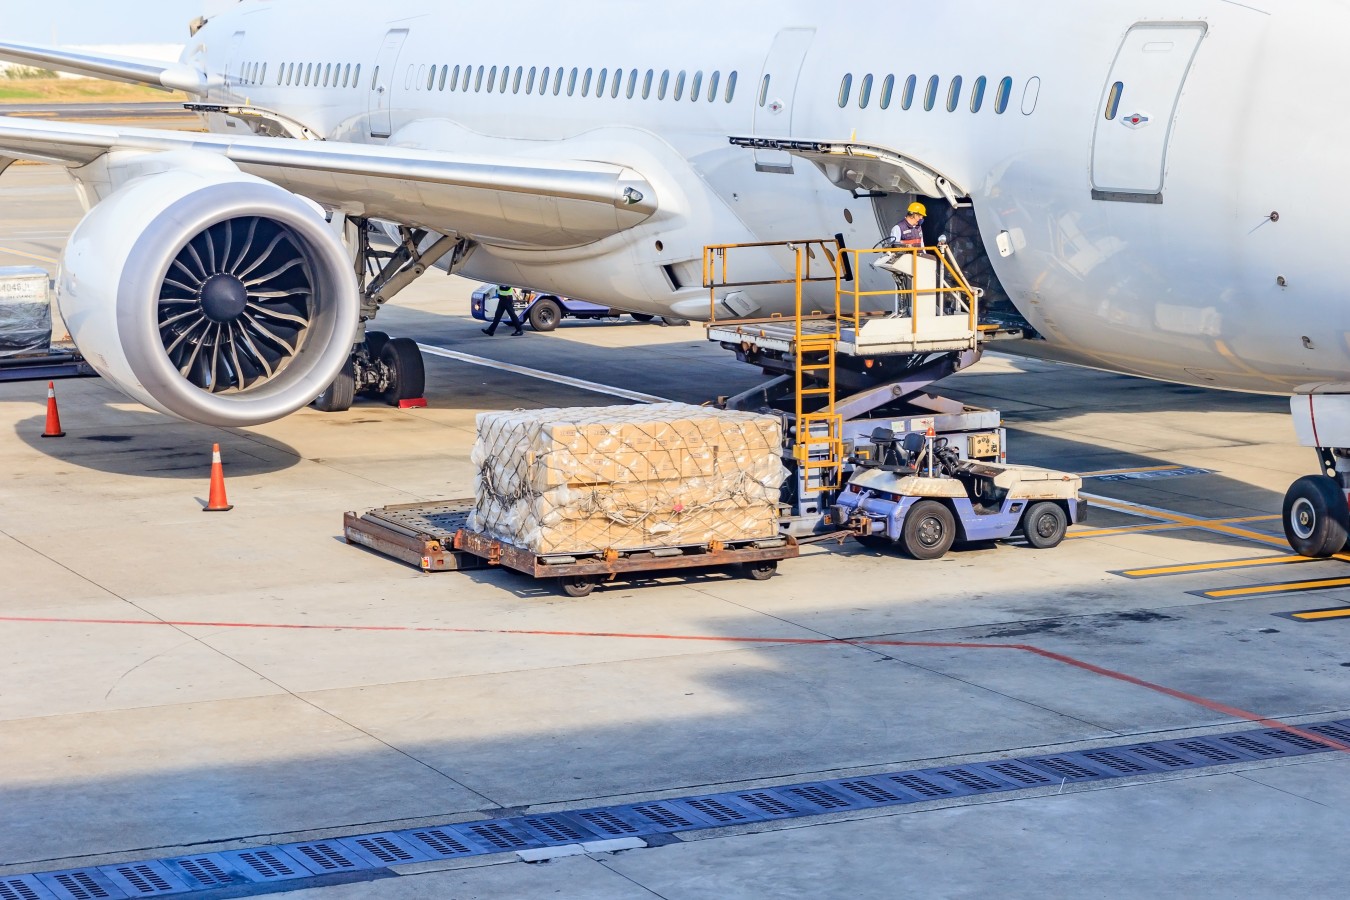 Air Freight Cargo